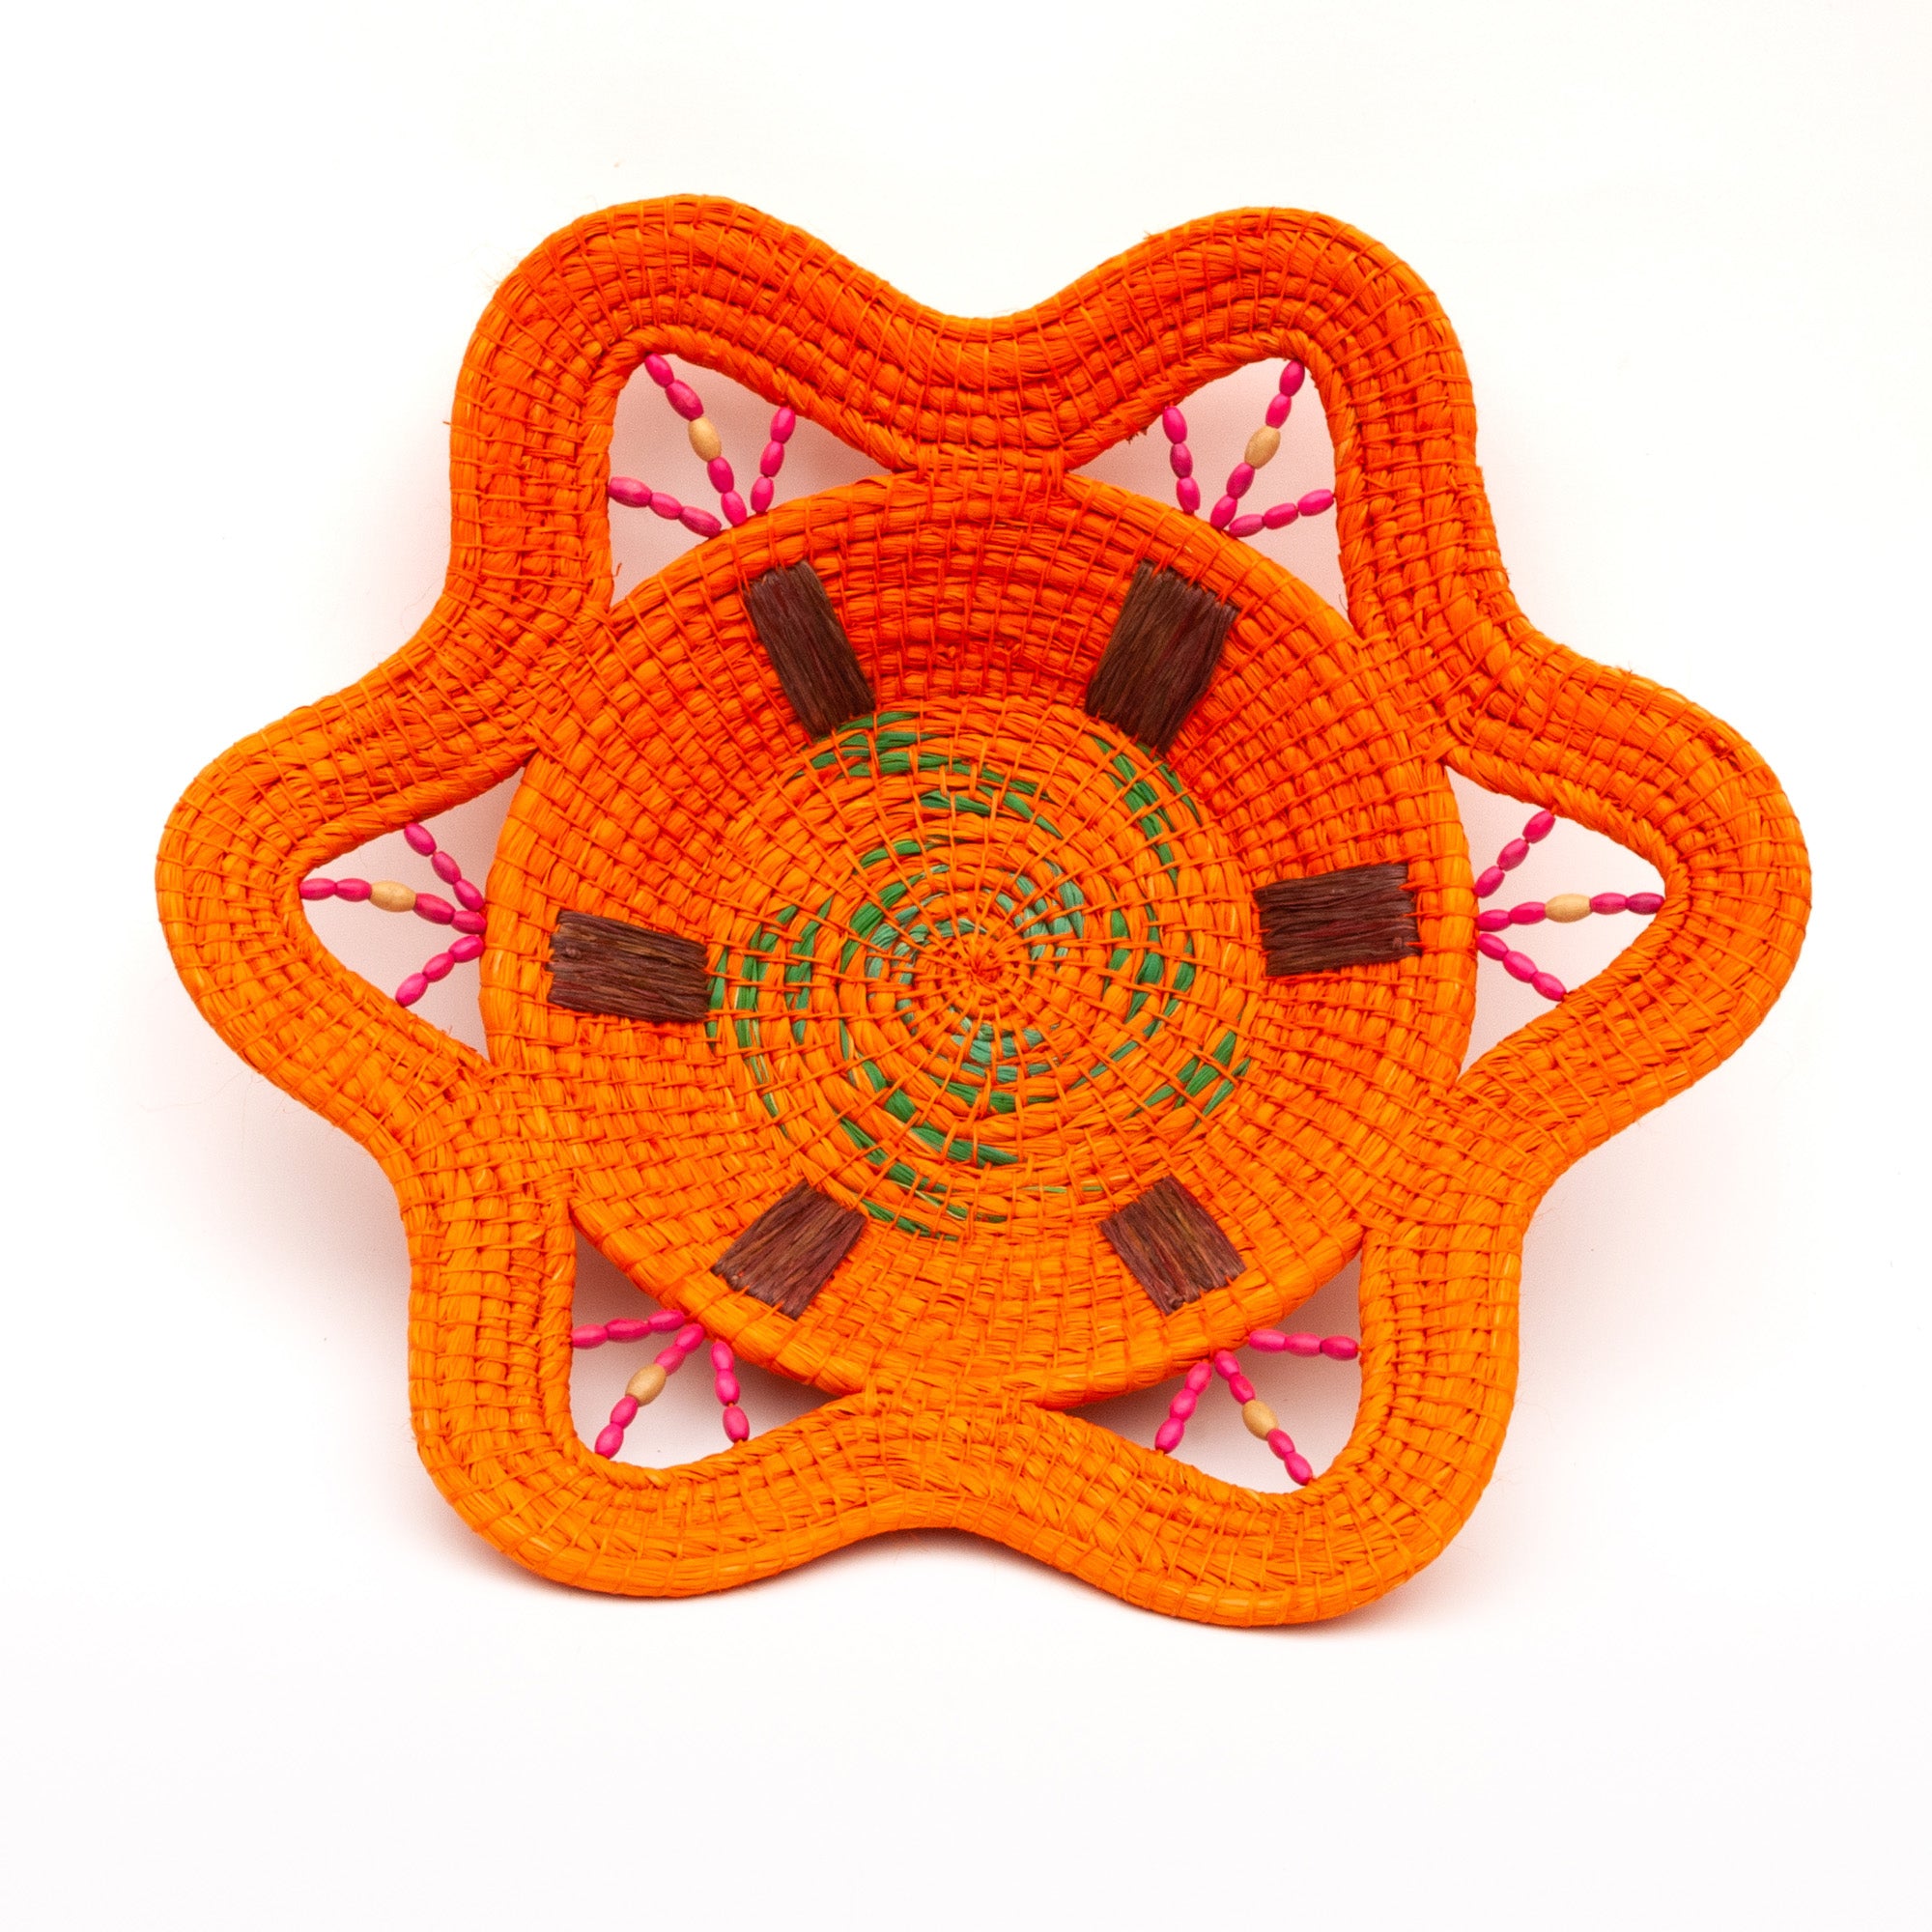 Orange Delight - Decorative Chambira Basket - Fair Trade Handmade by Peruvian Amazon Artisan